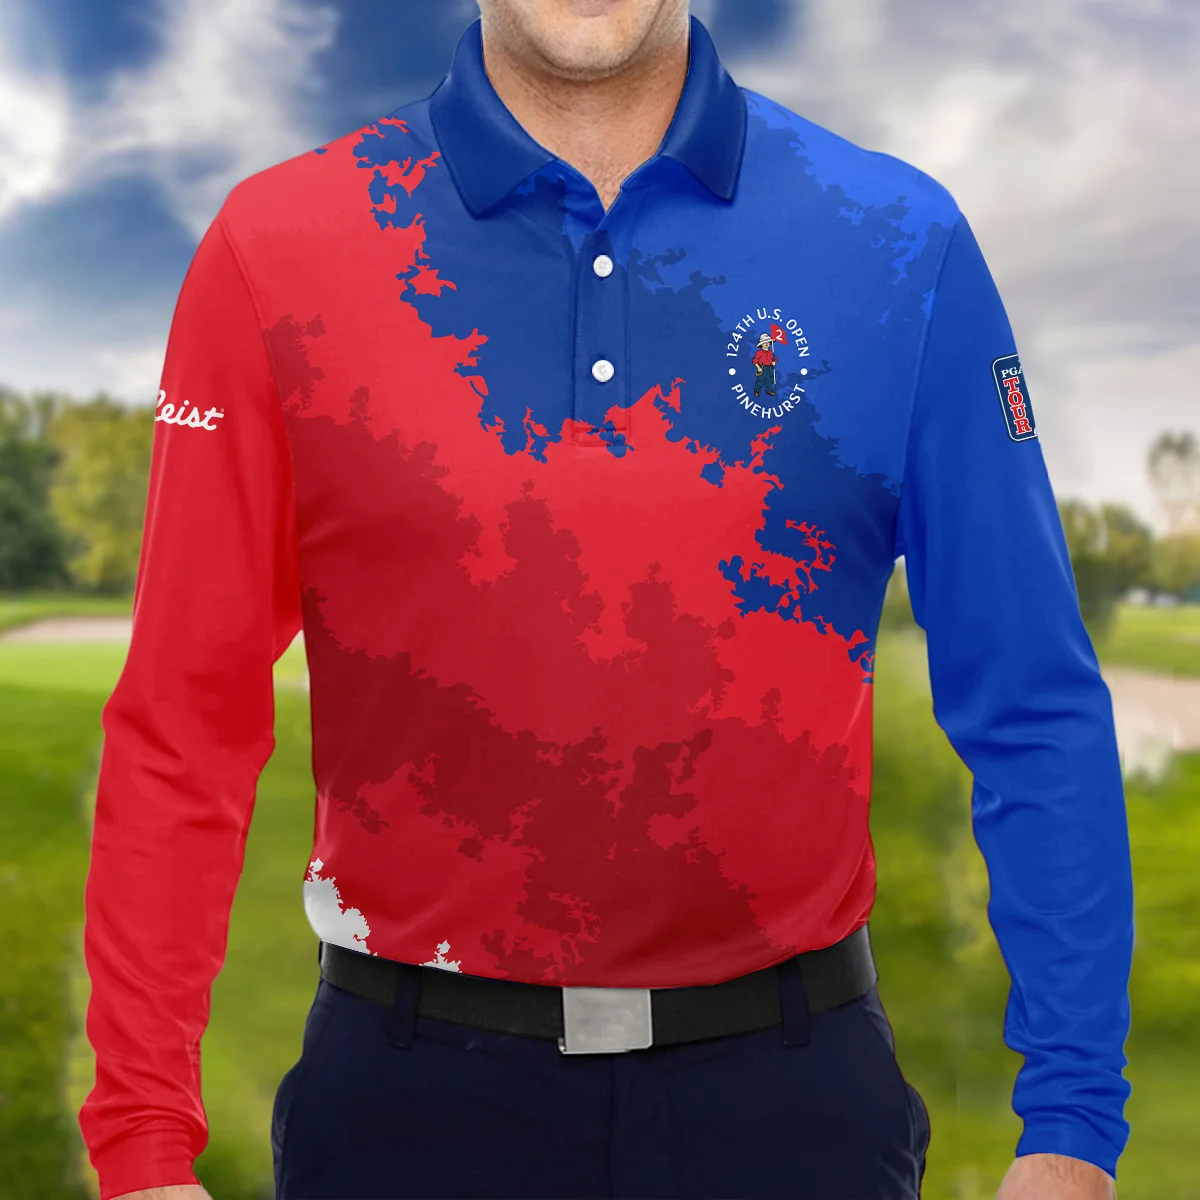 Titleist 124th U.S. Open Pinehurst Blue Red White Background Zipper Polo Shirt Style Classic